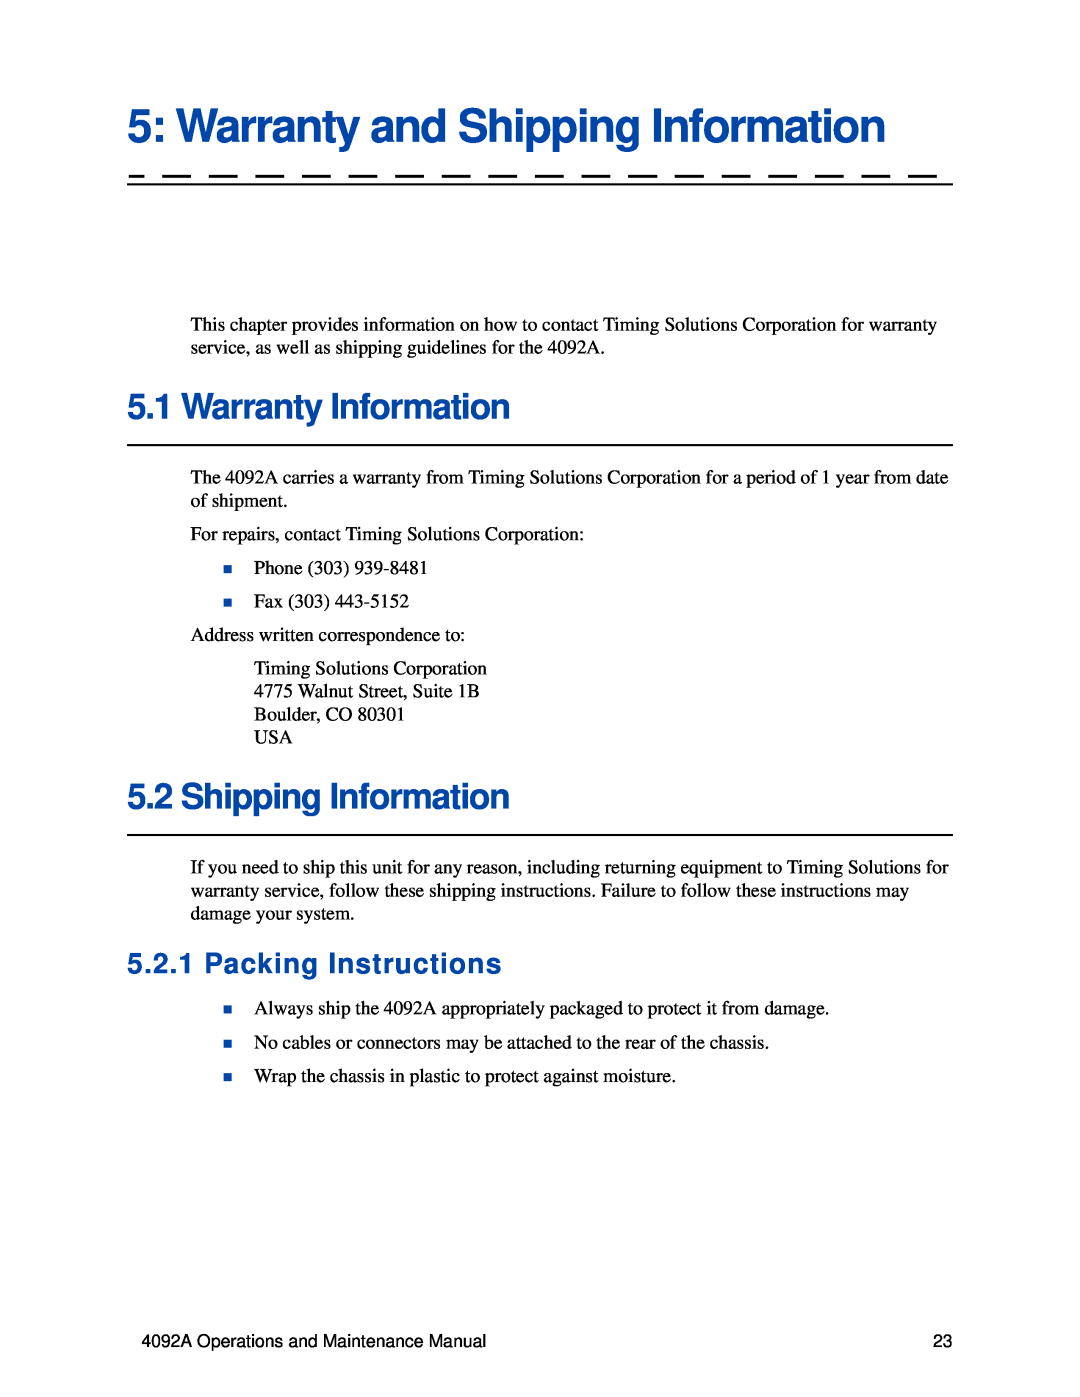 Lantronix 4092A IRIG-B manual Warranty and Shipping Information, Warranty Information, Packing Instructions 